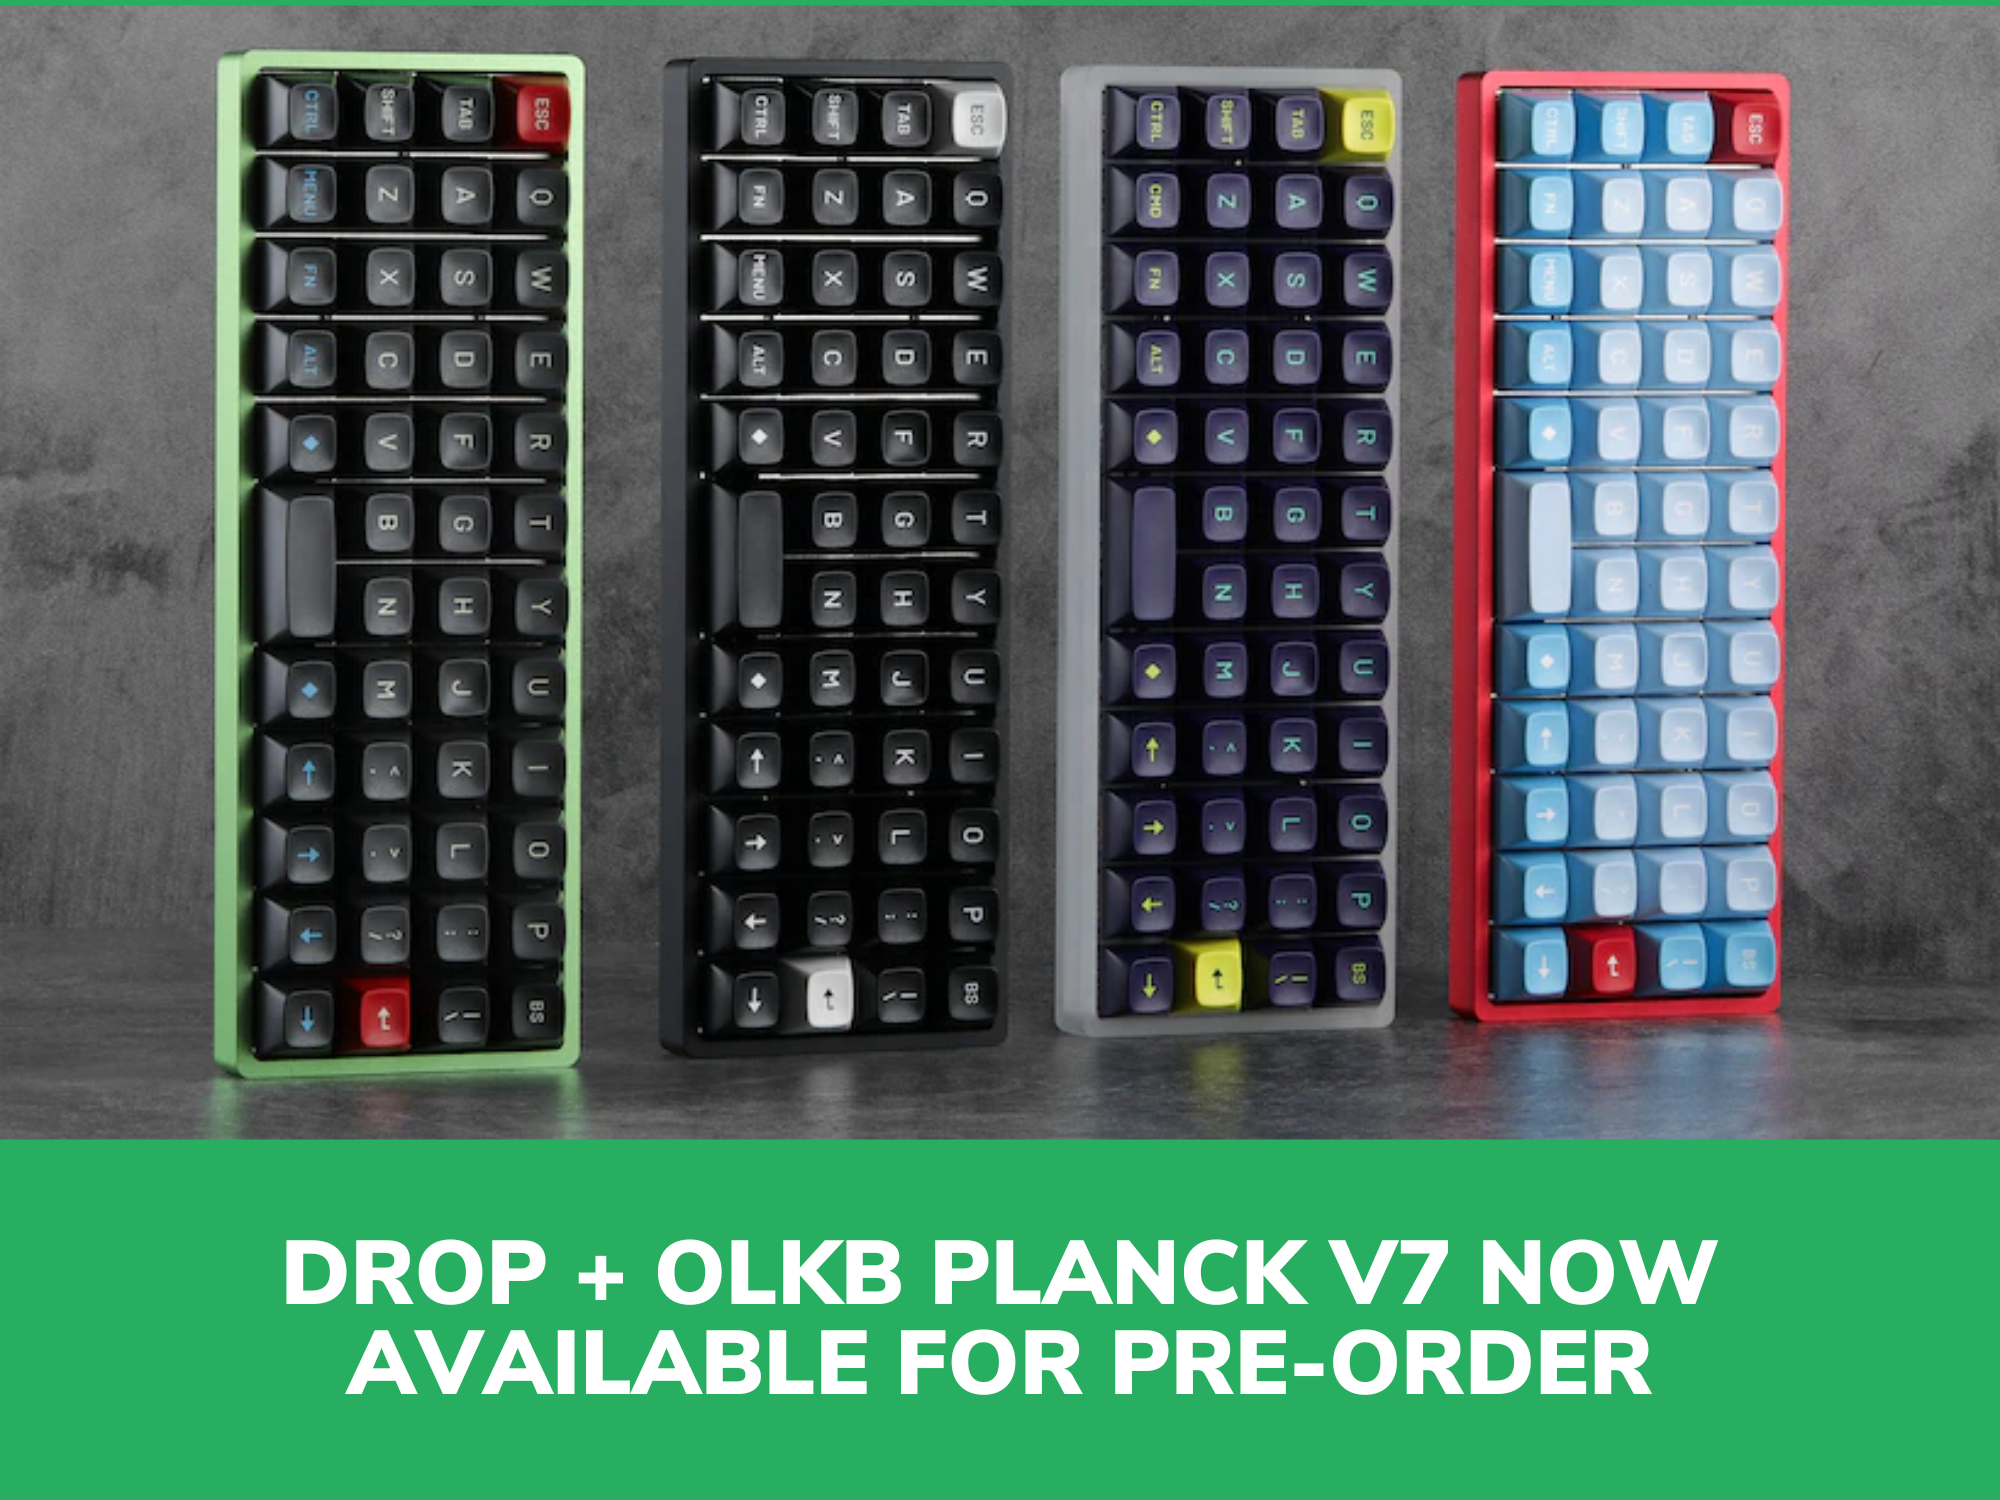 DROP + OLKB Planck V7 Now Available for Pre-Order